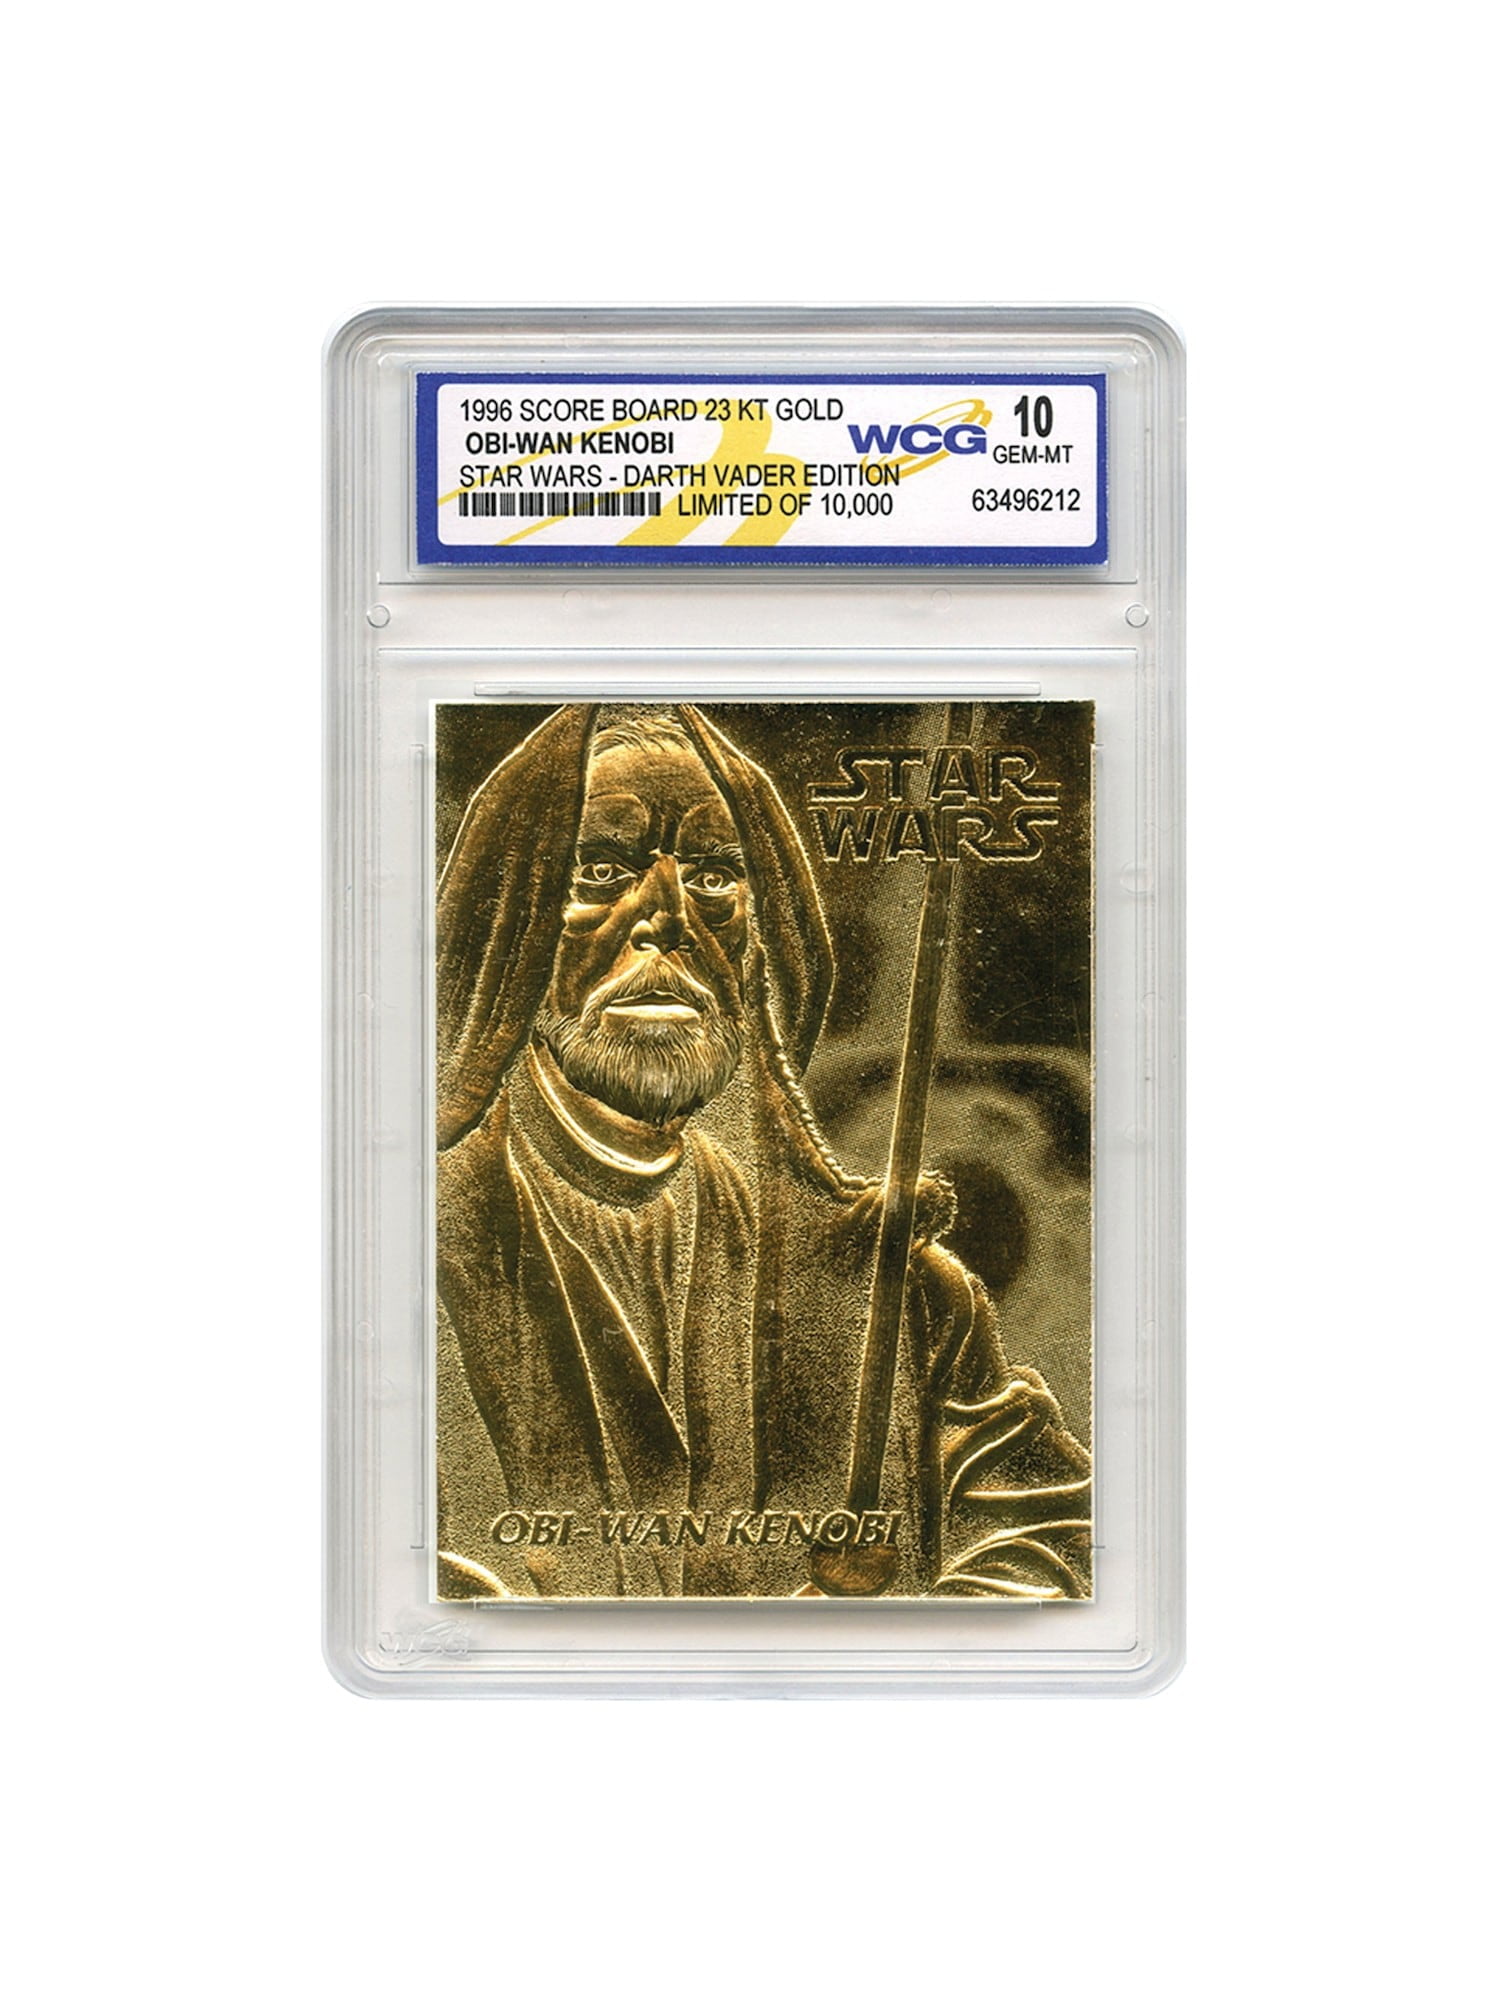 Star Wars DARTH VADER 23 KT Karat Gold Card Sculptured Graded GEM MINT 10 